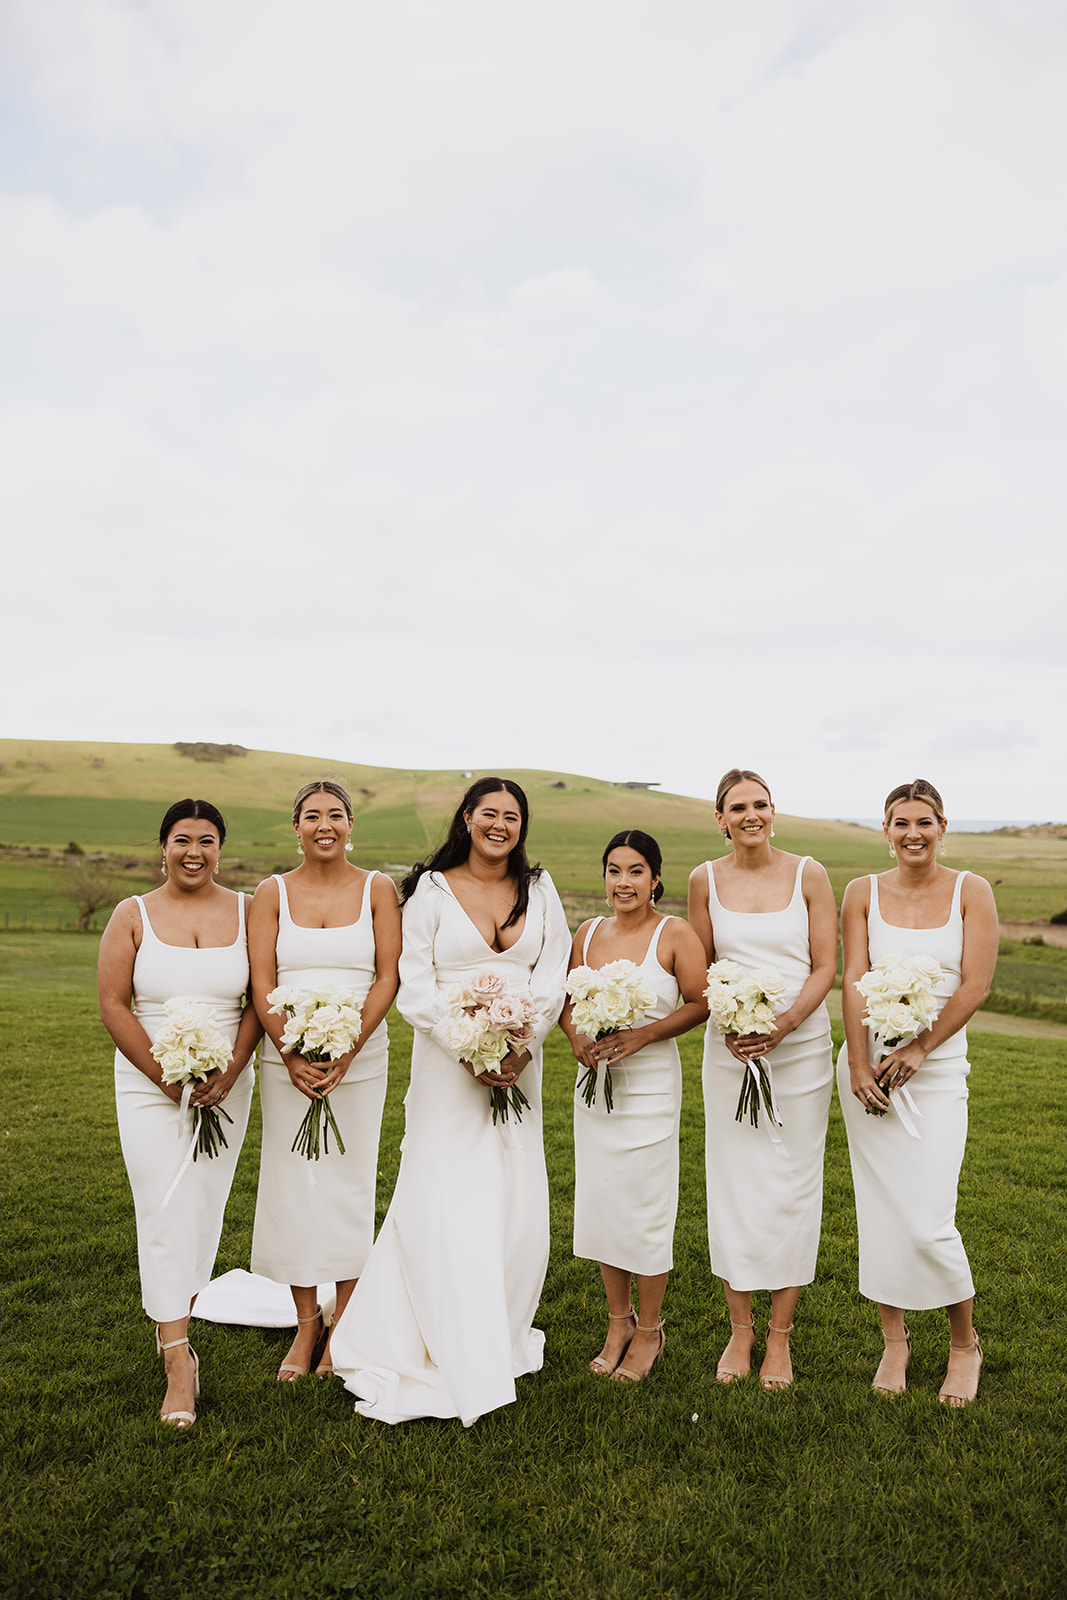 The bride and bridesmaids at Seacliff House